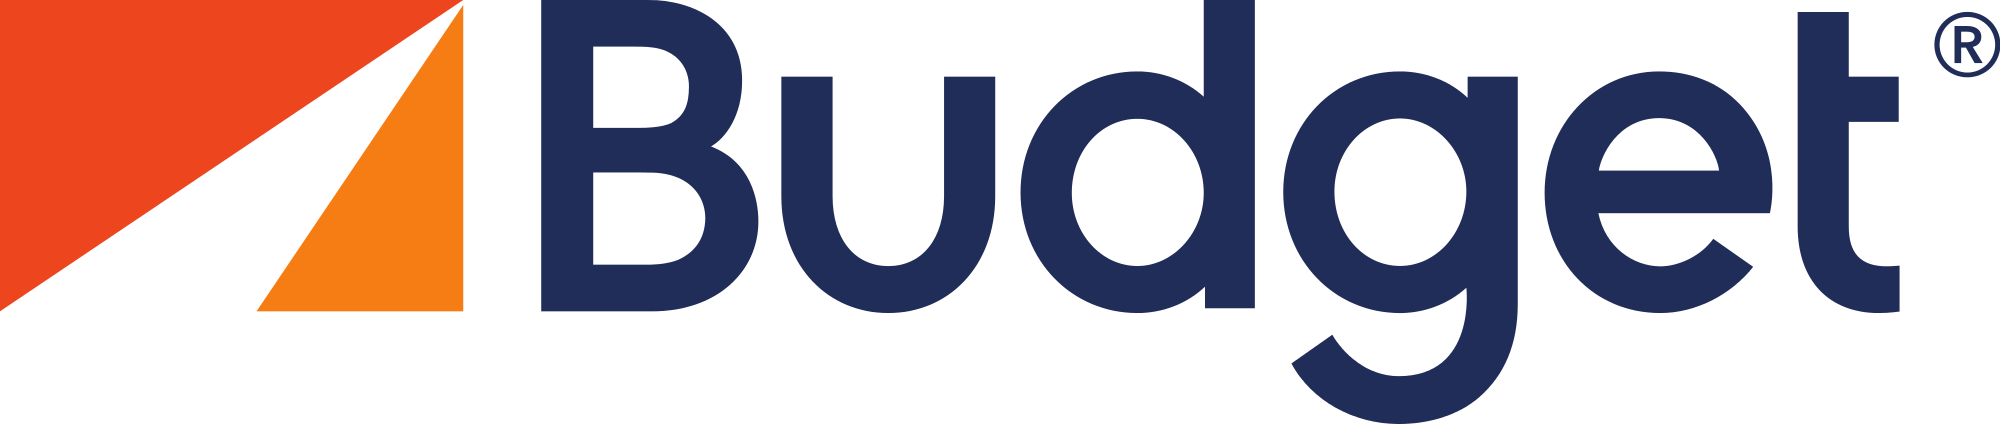 Budget Logo Per Wikimedia Commons